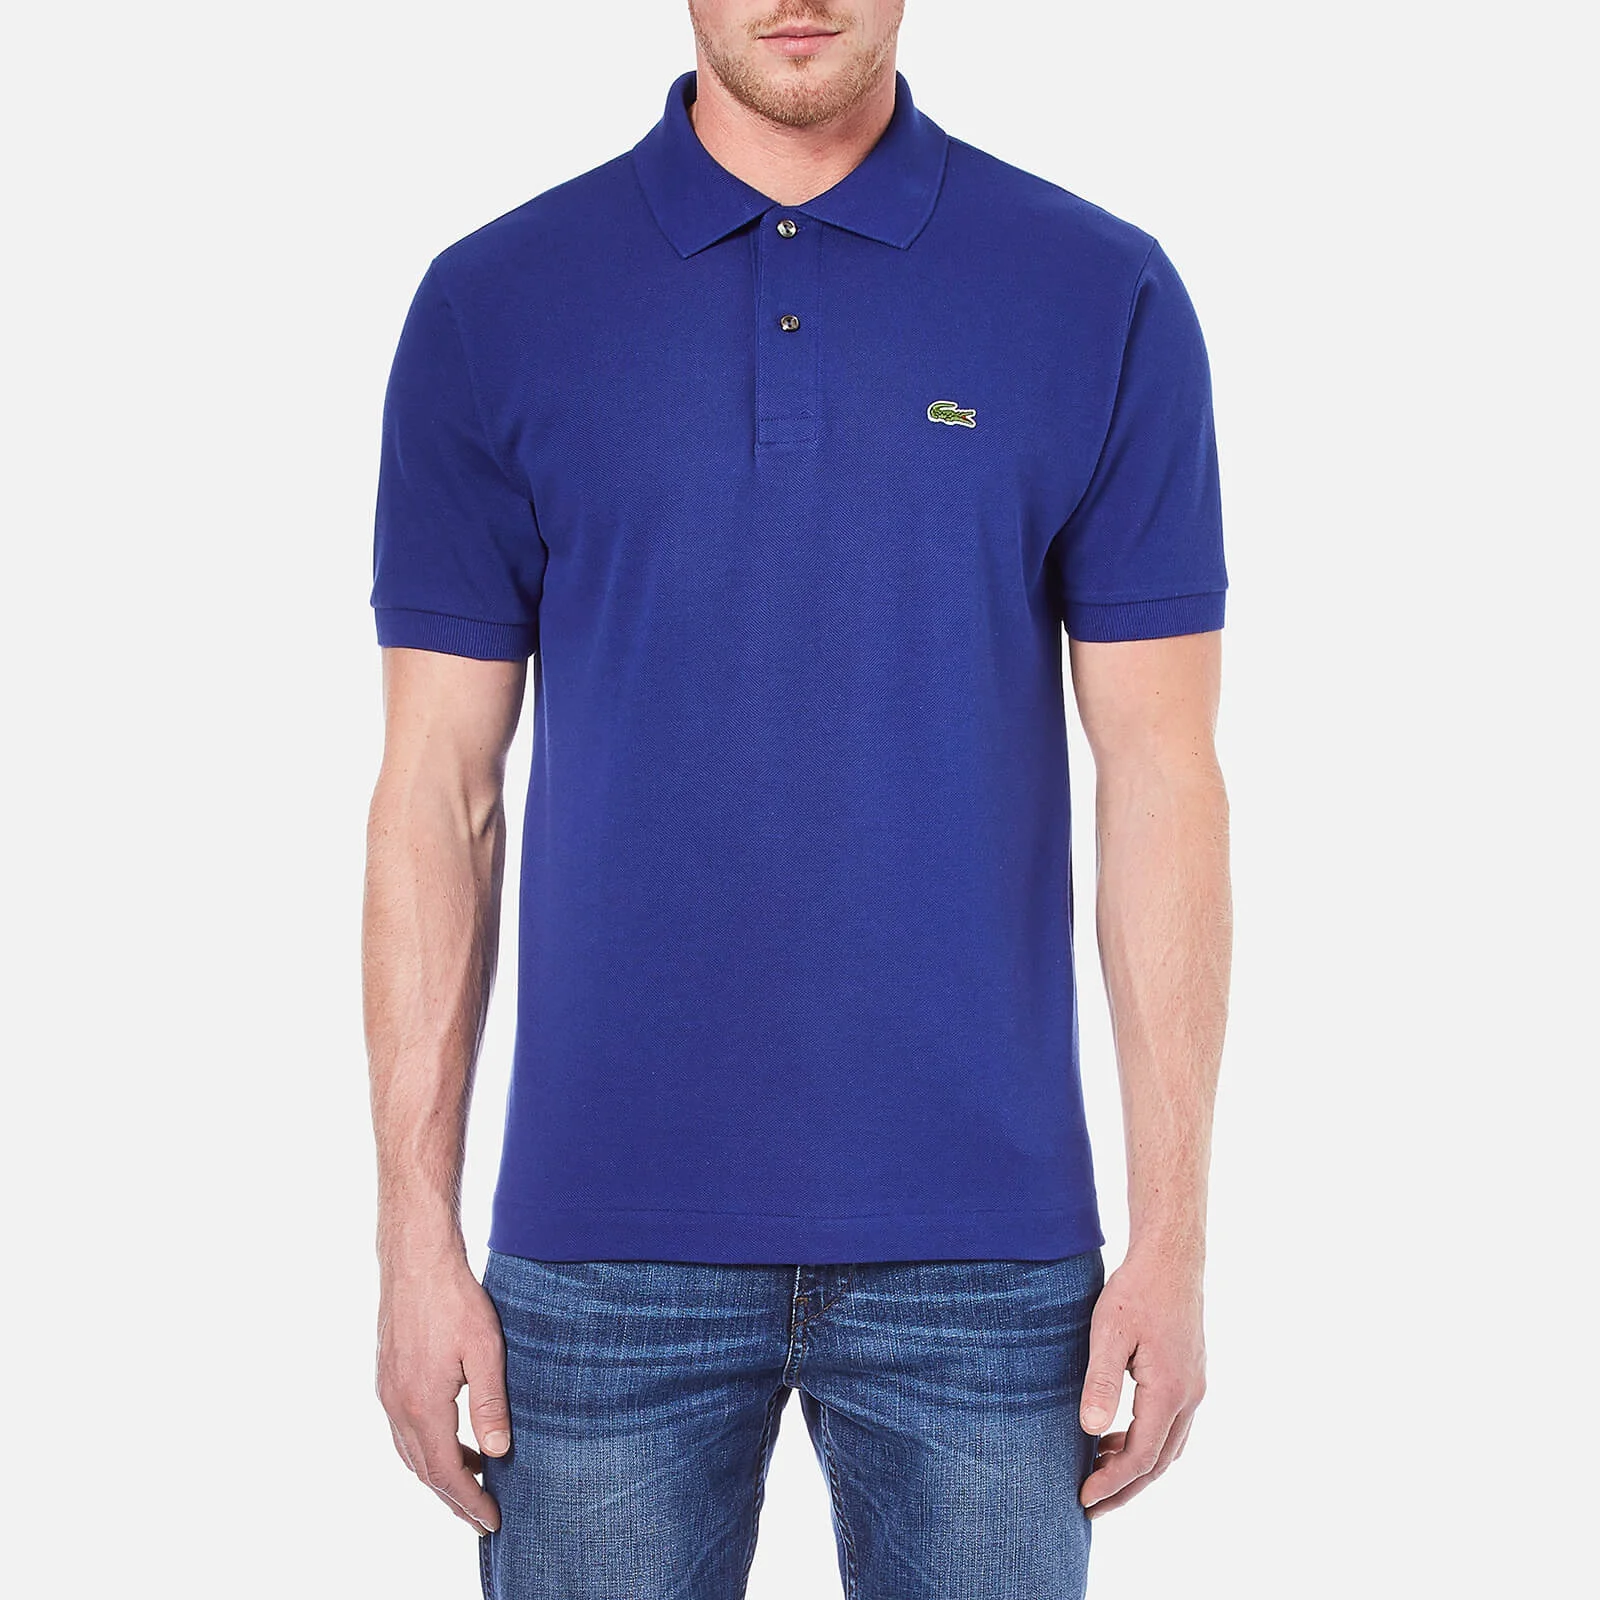 Lacoste Men's Short Sleeve Polo Shirt - Ocean Image 1